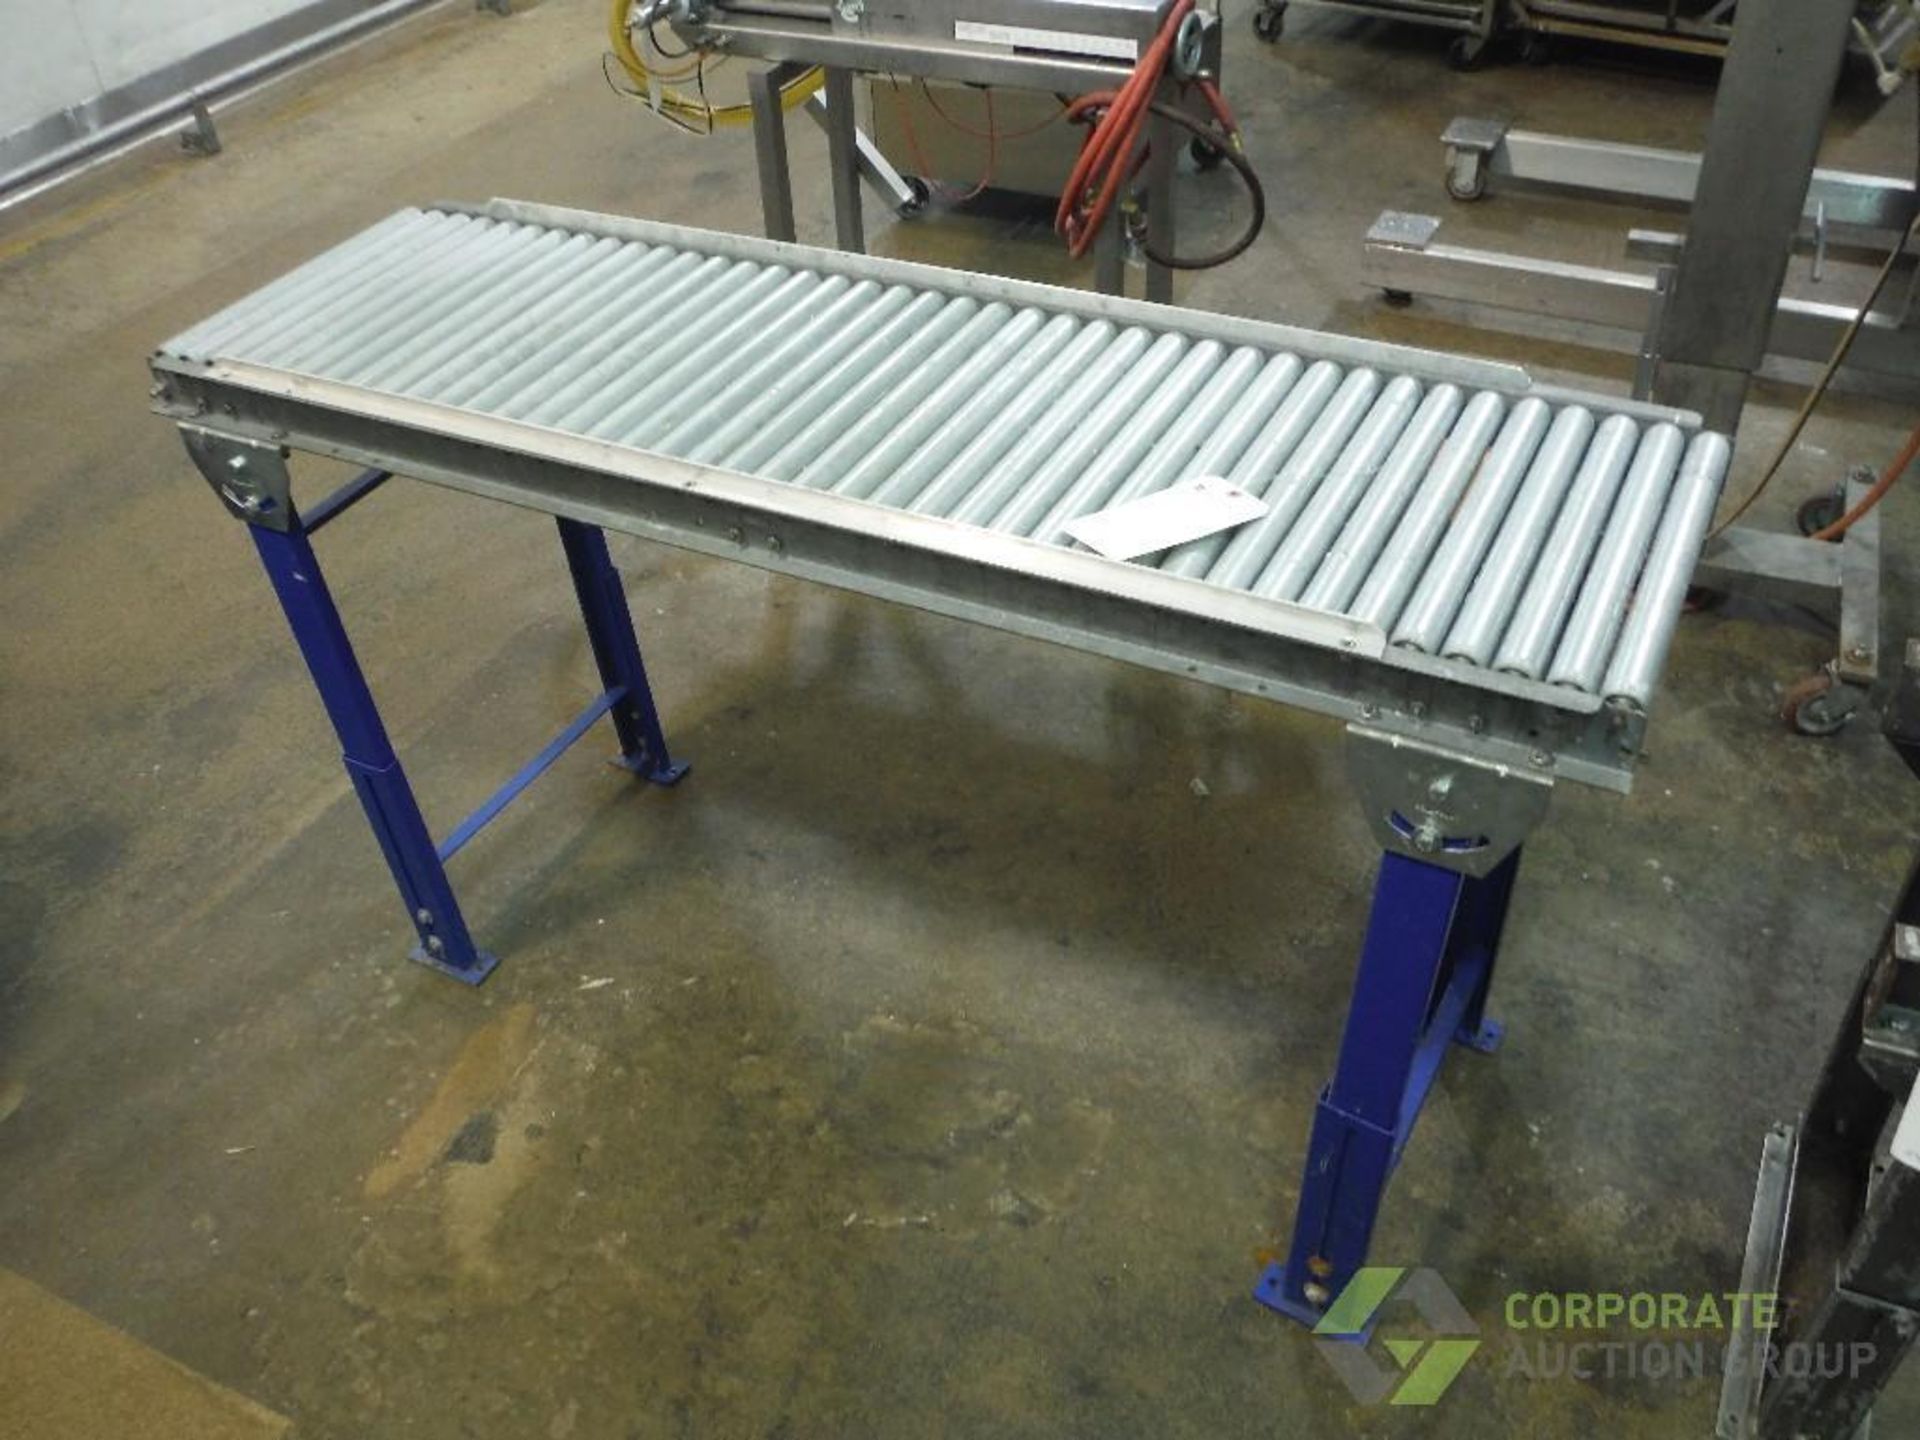 Mild steel powerless roller conveyor, 60 in. long x 16 in. wide x 36 in. tall - Image 2 of 2